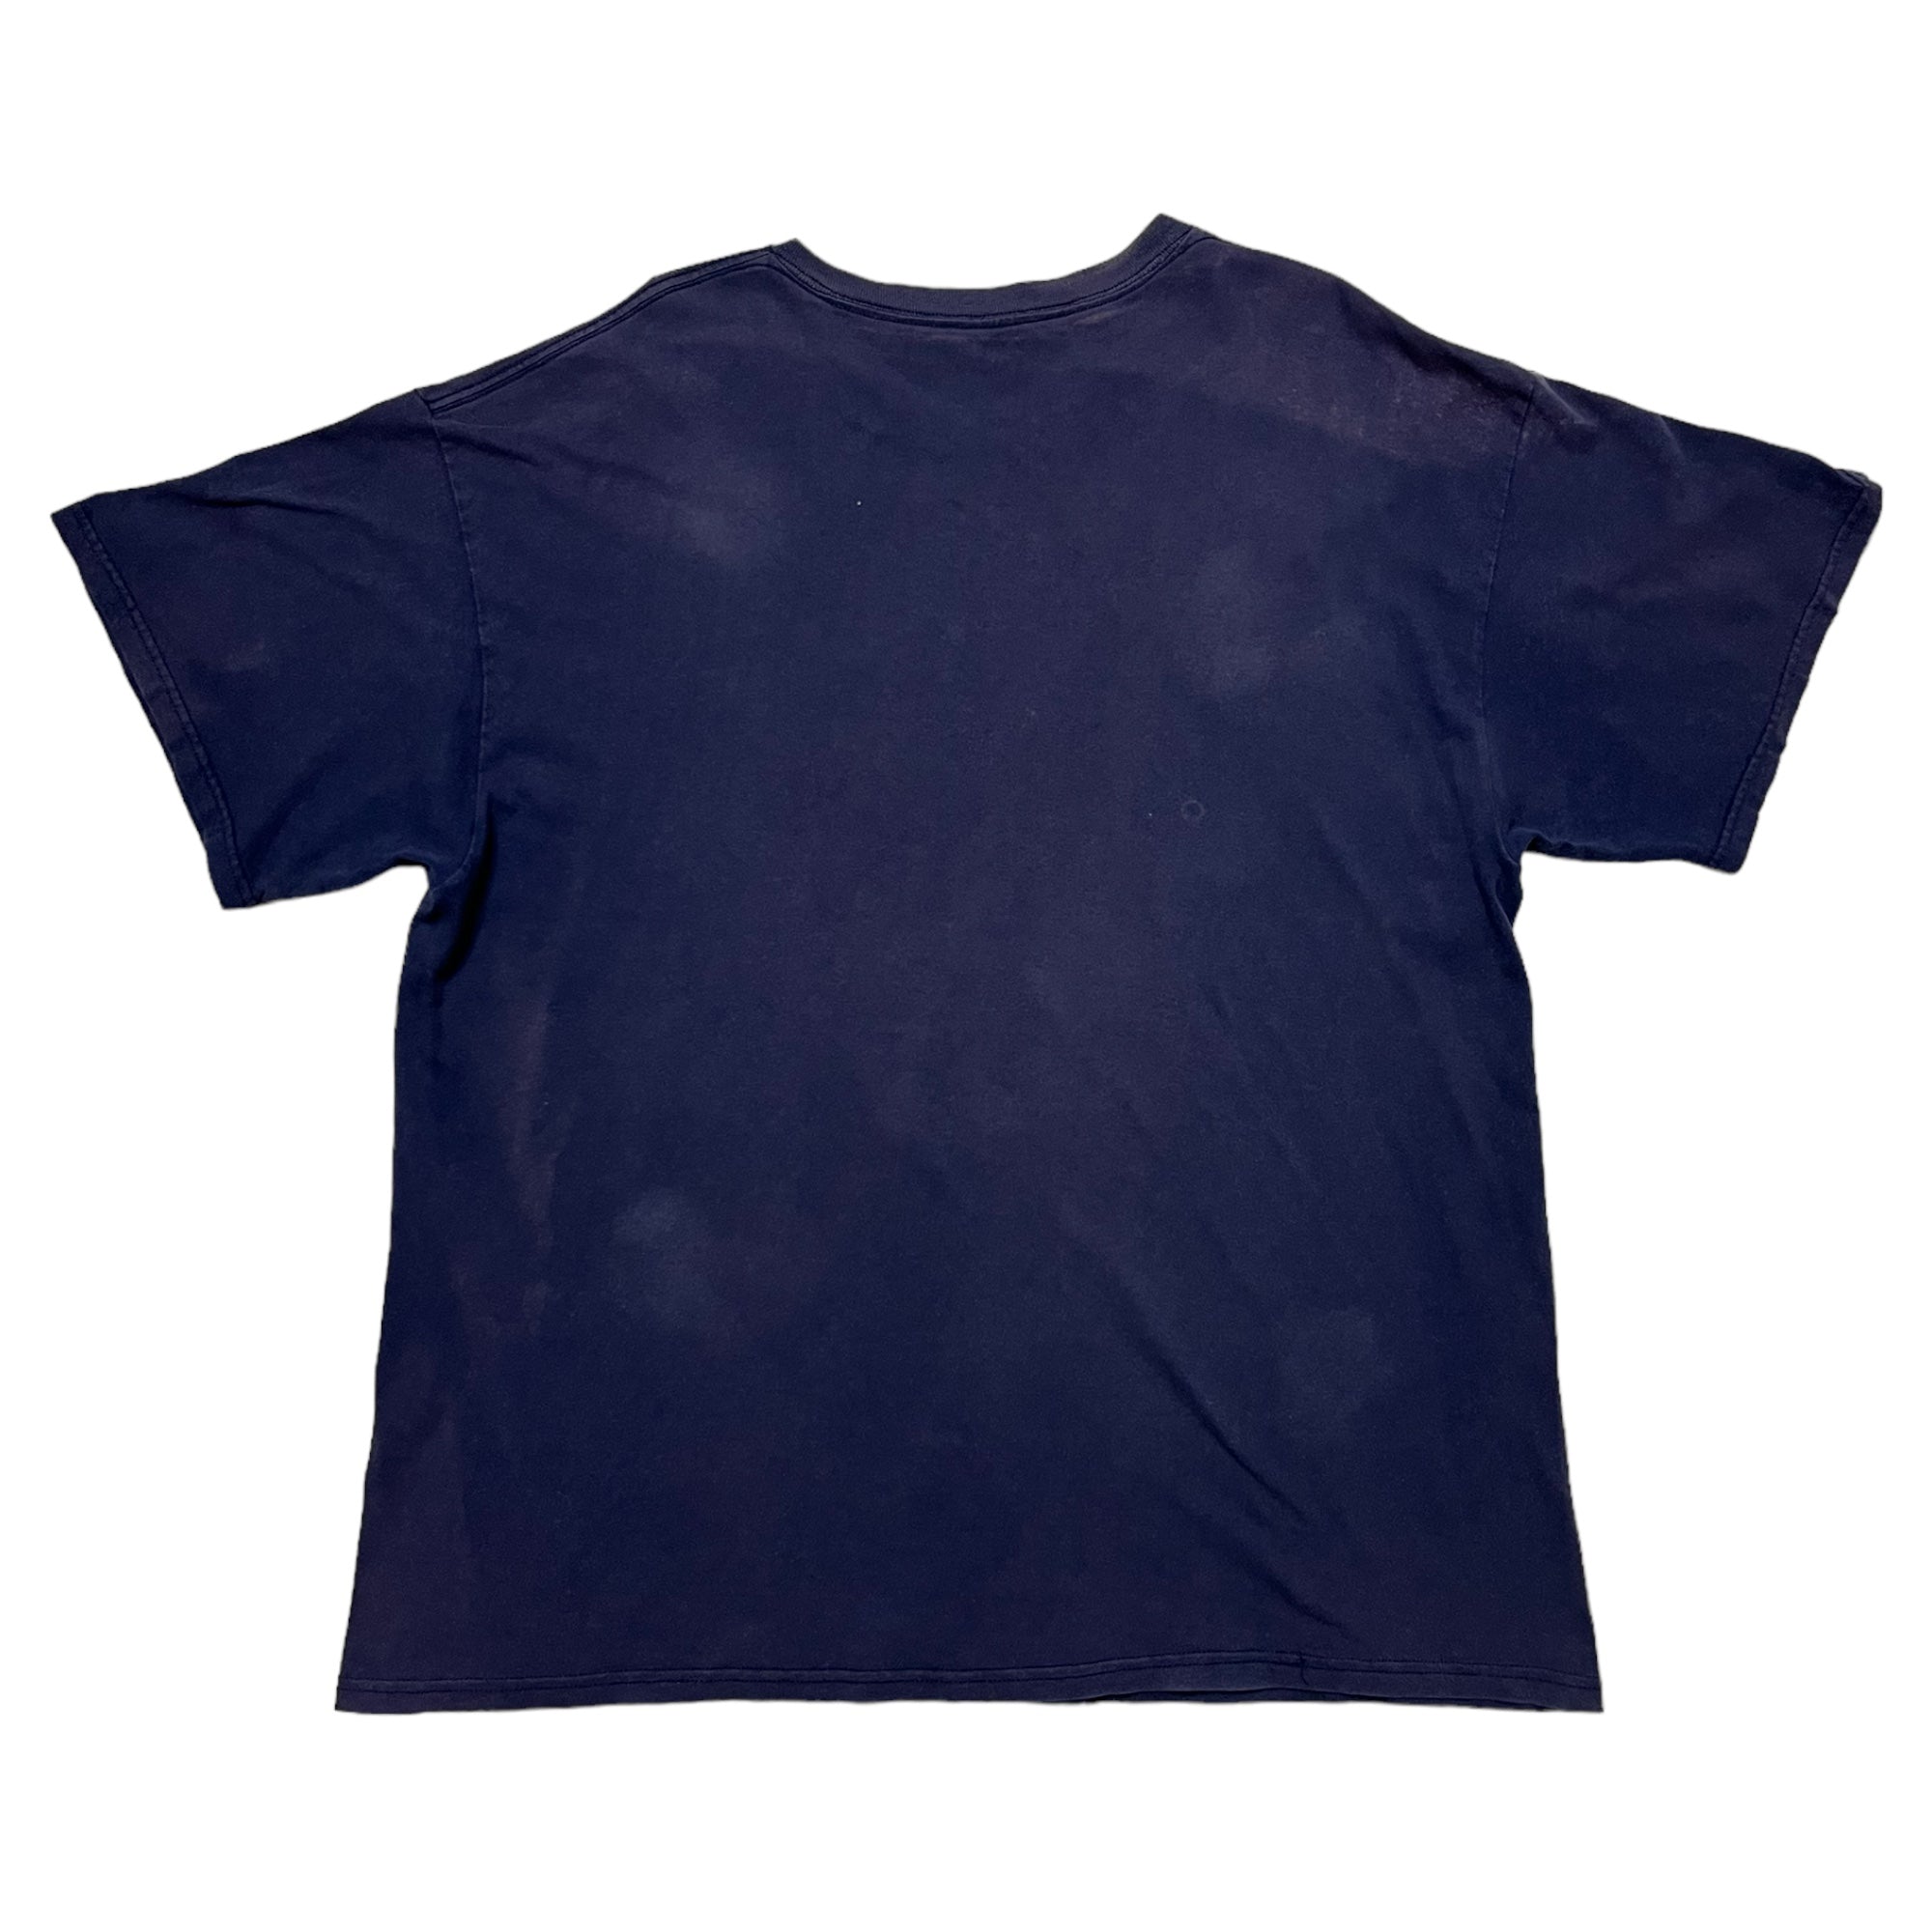 ‘90s/00s ‘Hey Fuck Face’ The North Face Novelty T-Shirt - Sun Faded Navy - XL